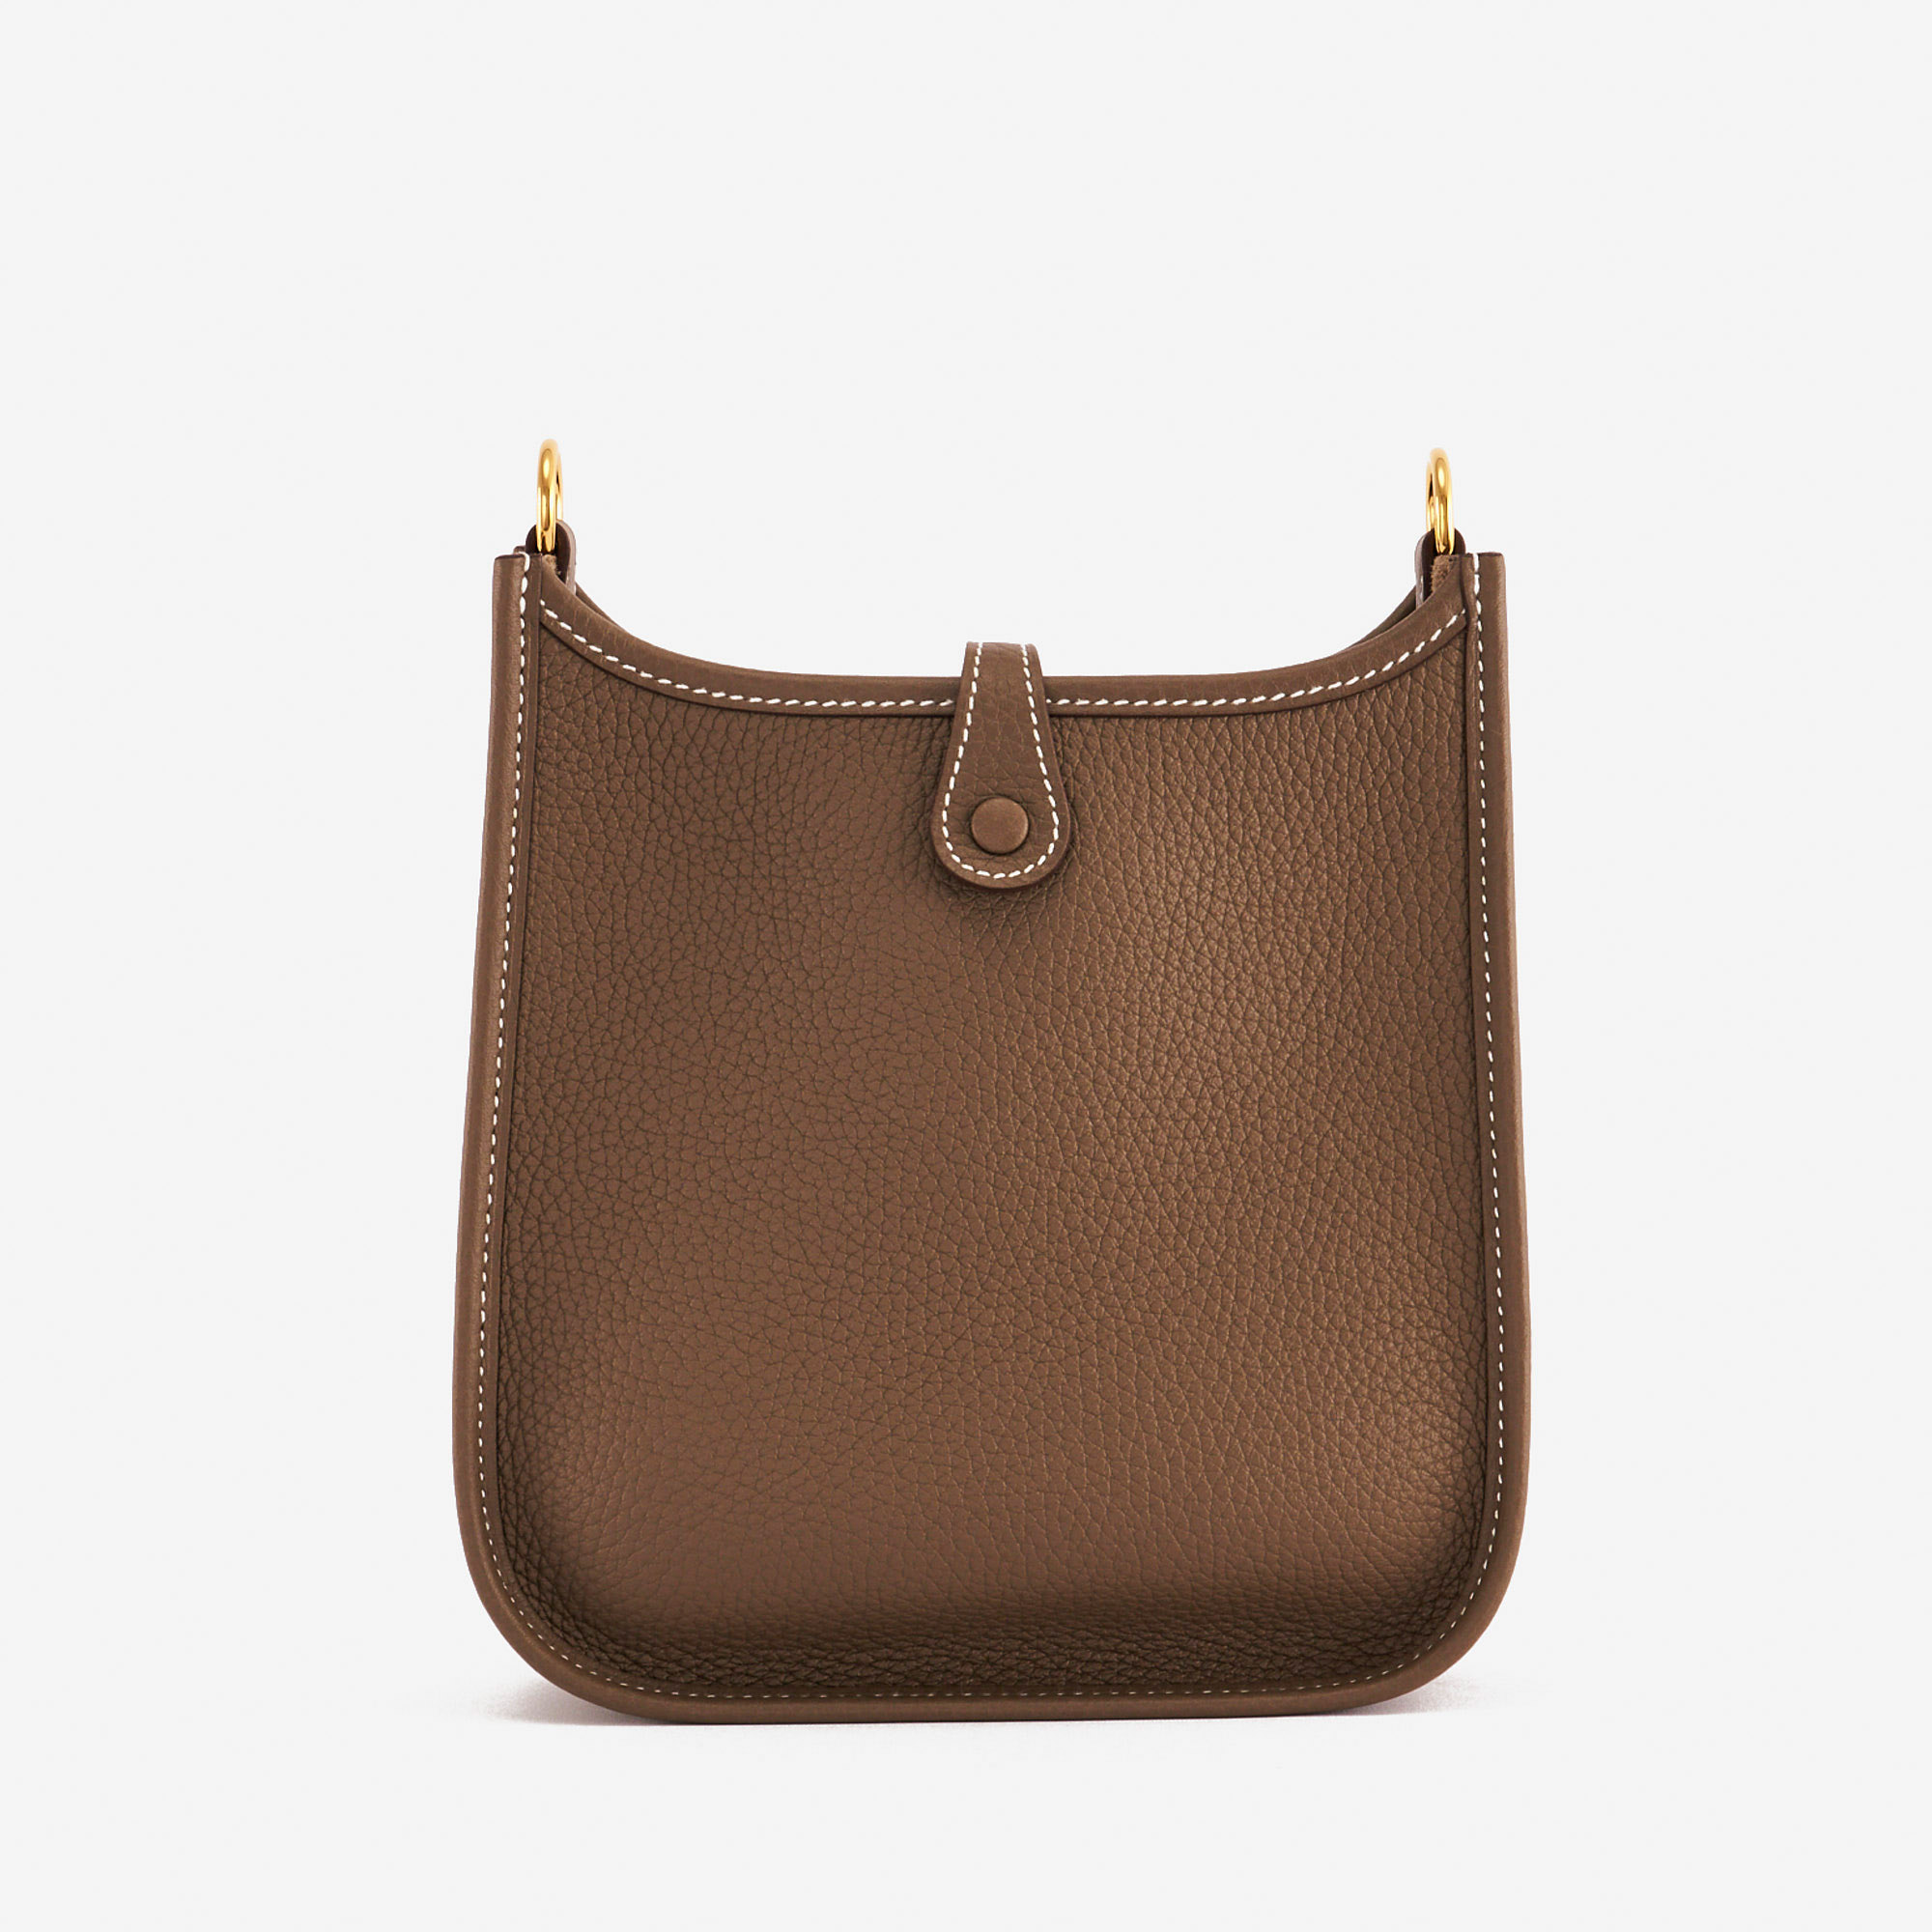 Pre-owned Hermès bag Evelyne 16 Amazone Etoupe / Bleu Indigo Brown | Sell your designer bag on Saclab.com